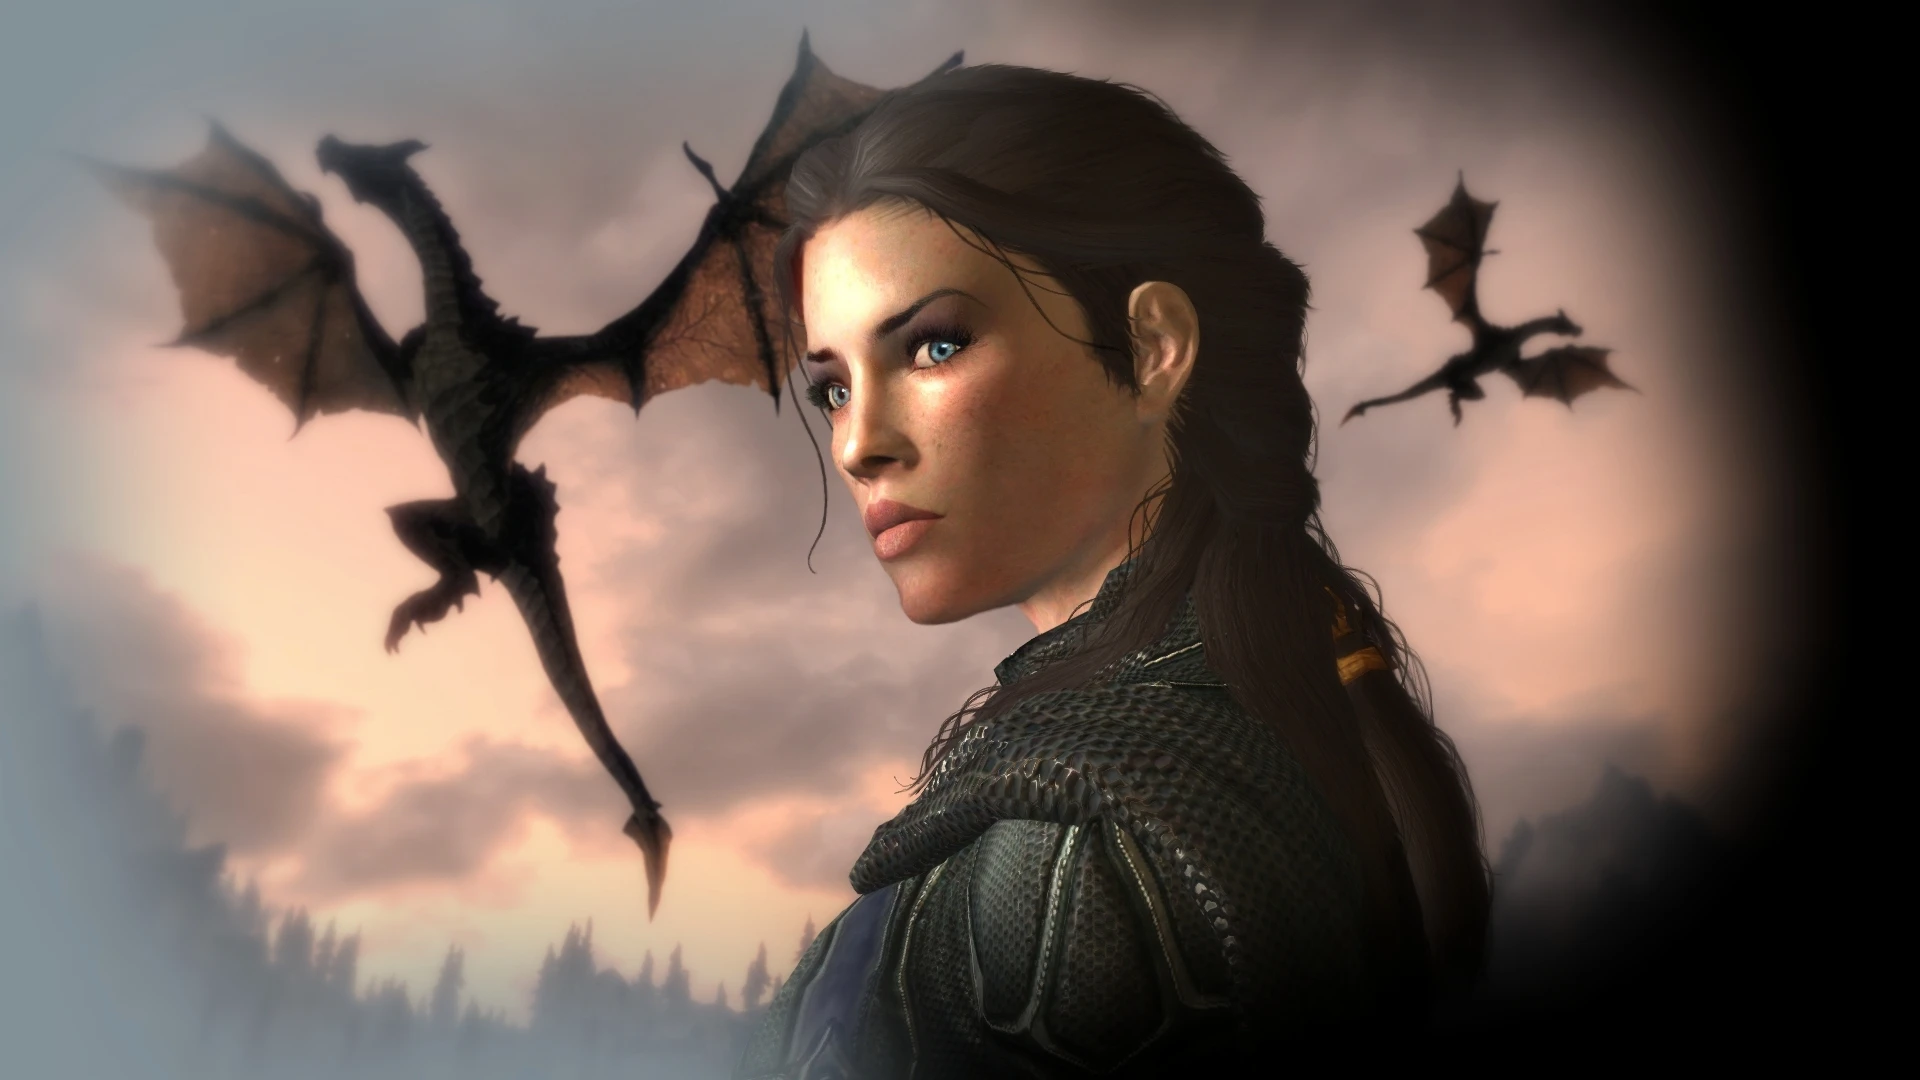 Skyrim The Dragonborn Comes Female Cover